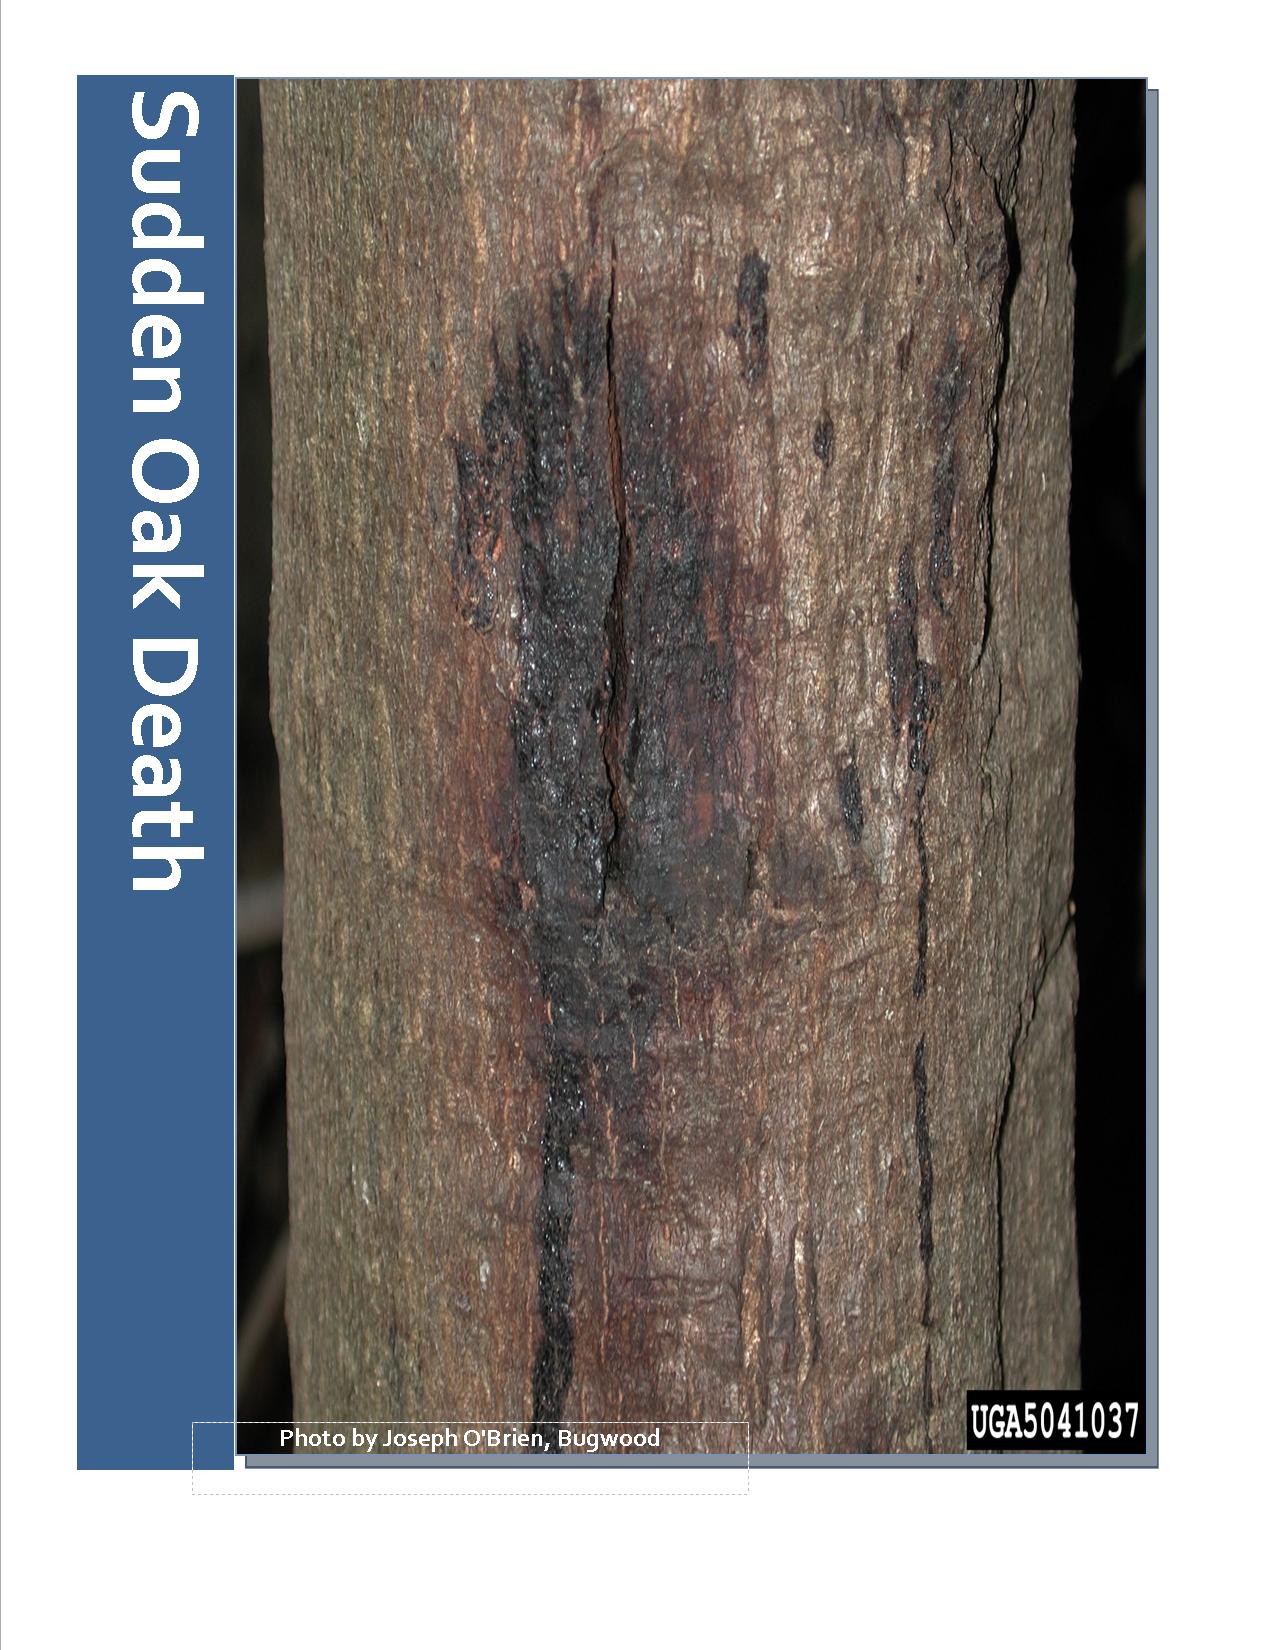 Sudden Oak Death/Ramorum Blight